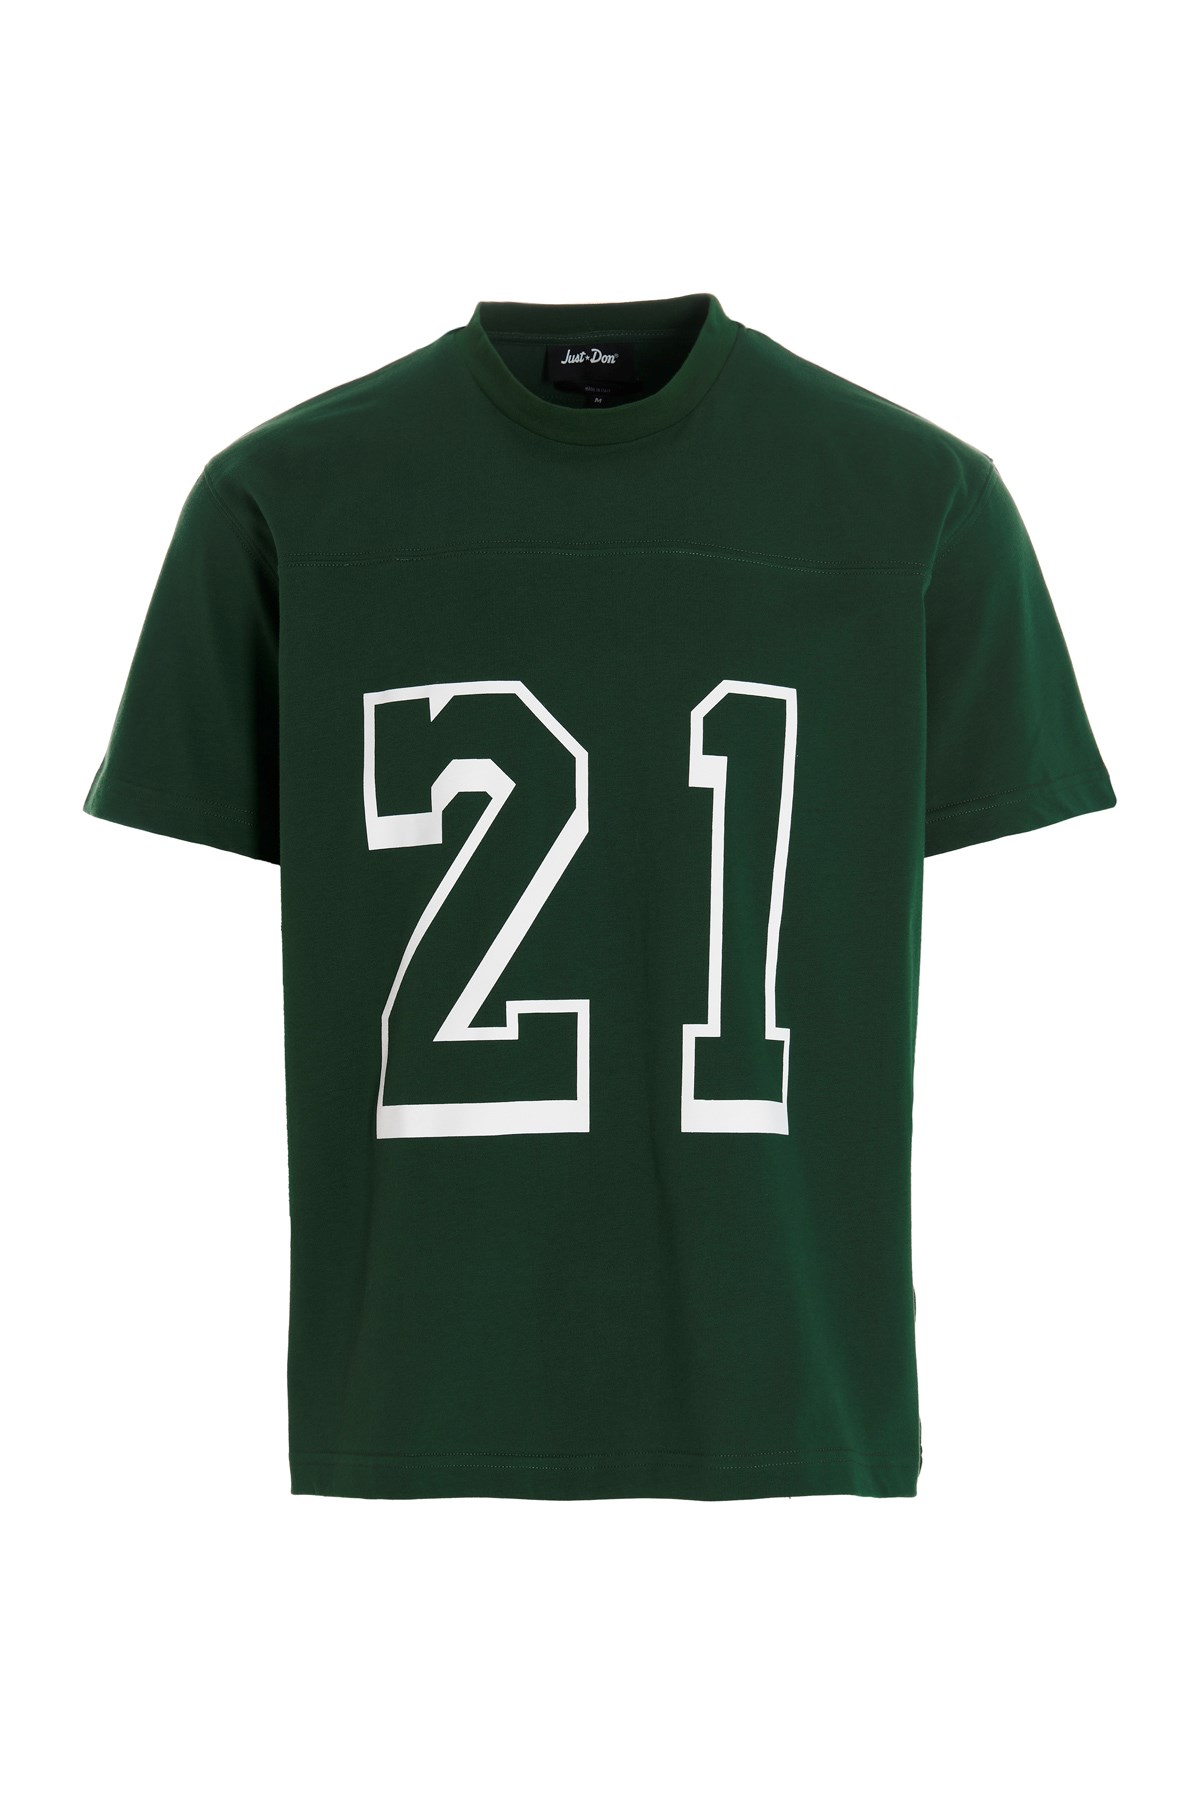 JUST DON '21’ T-Shirt